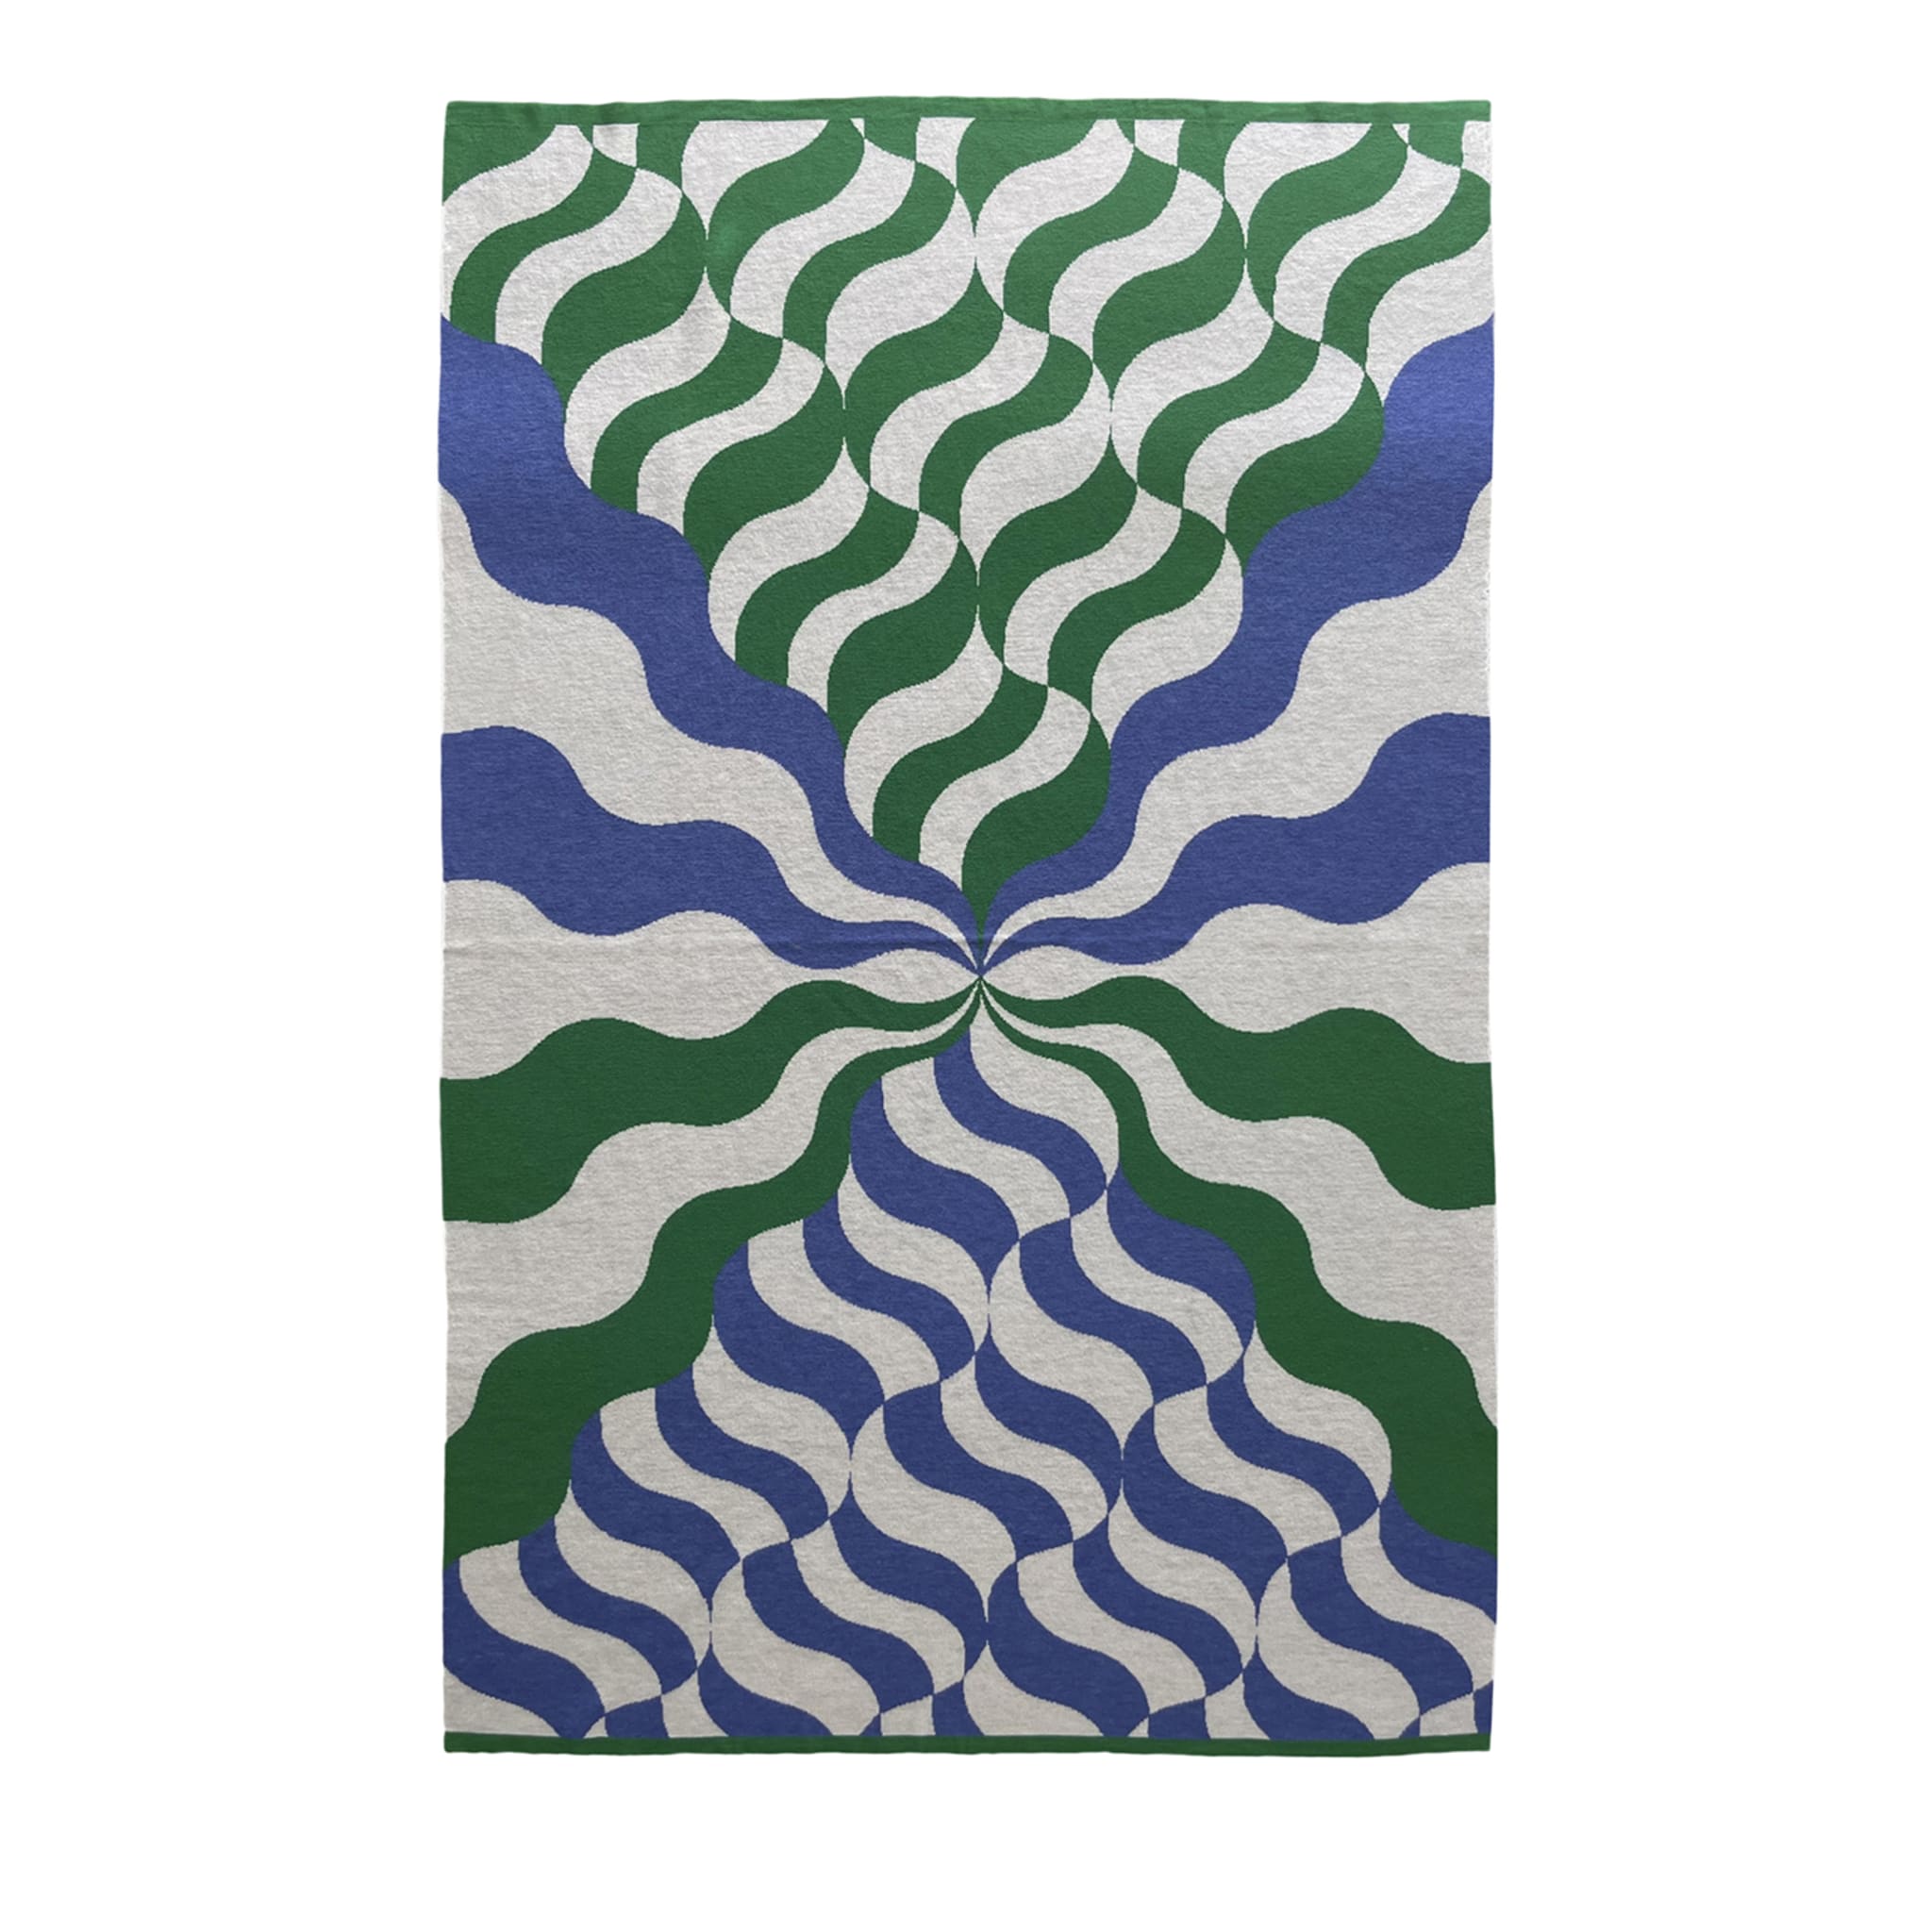 Trip 6 Polychrome Tapestry/Blanket by Serena Confalonieri - Main view